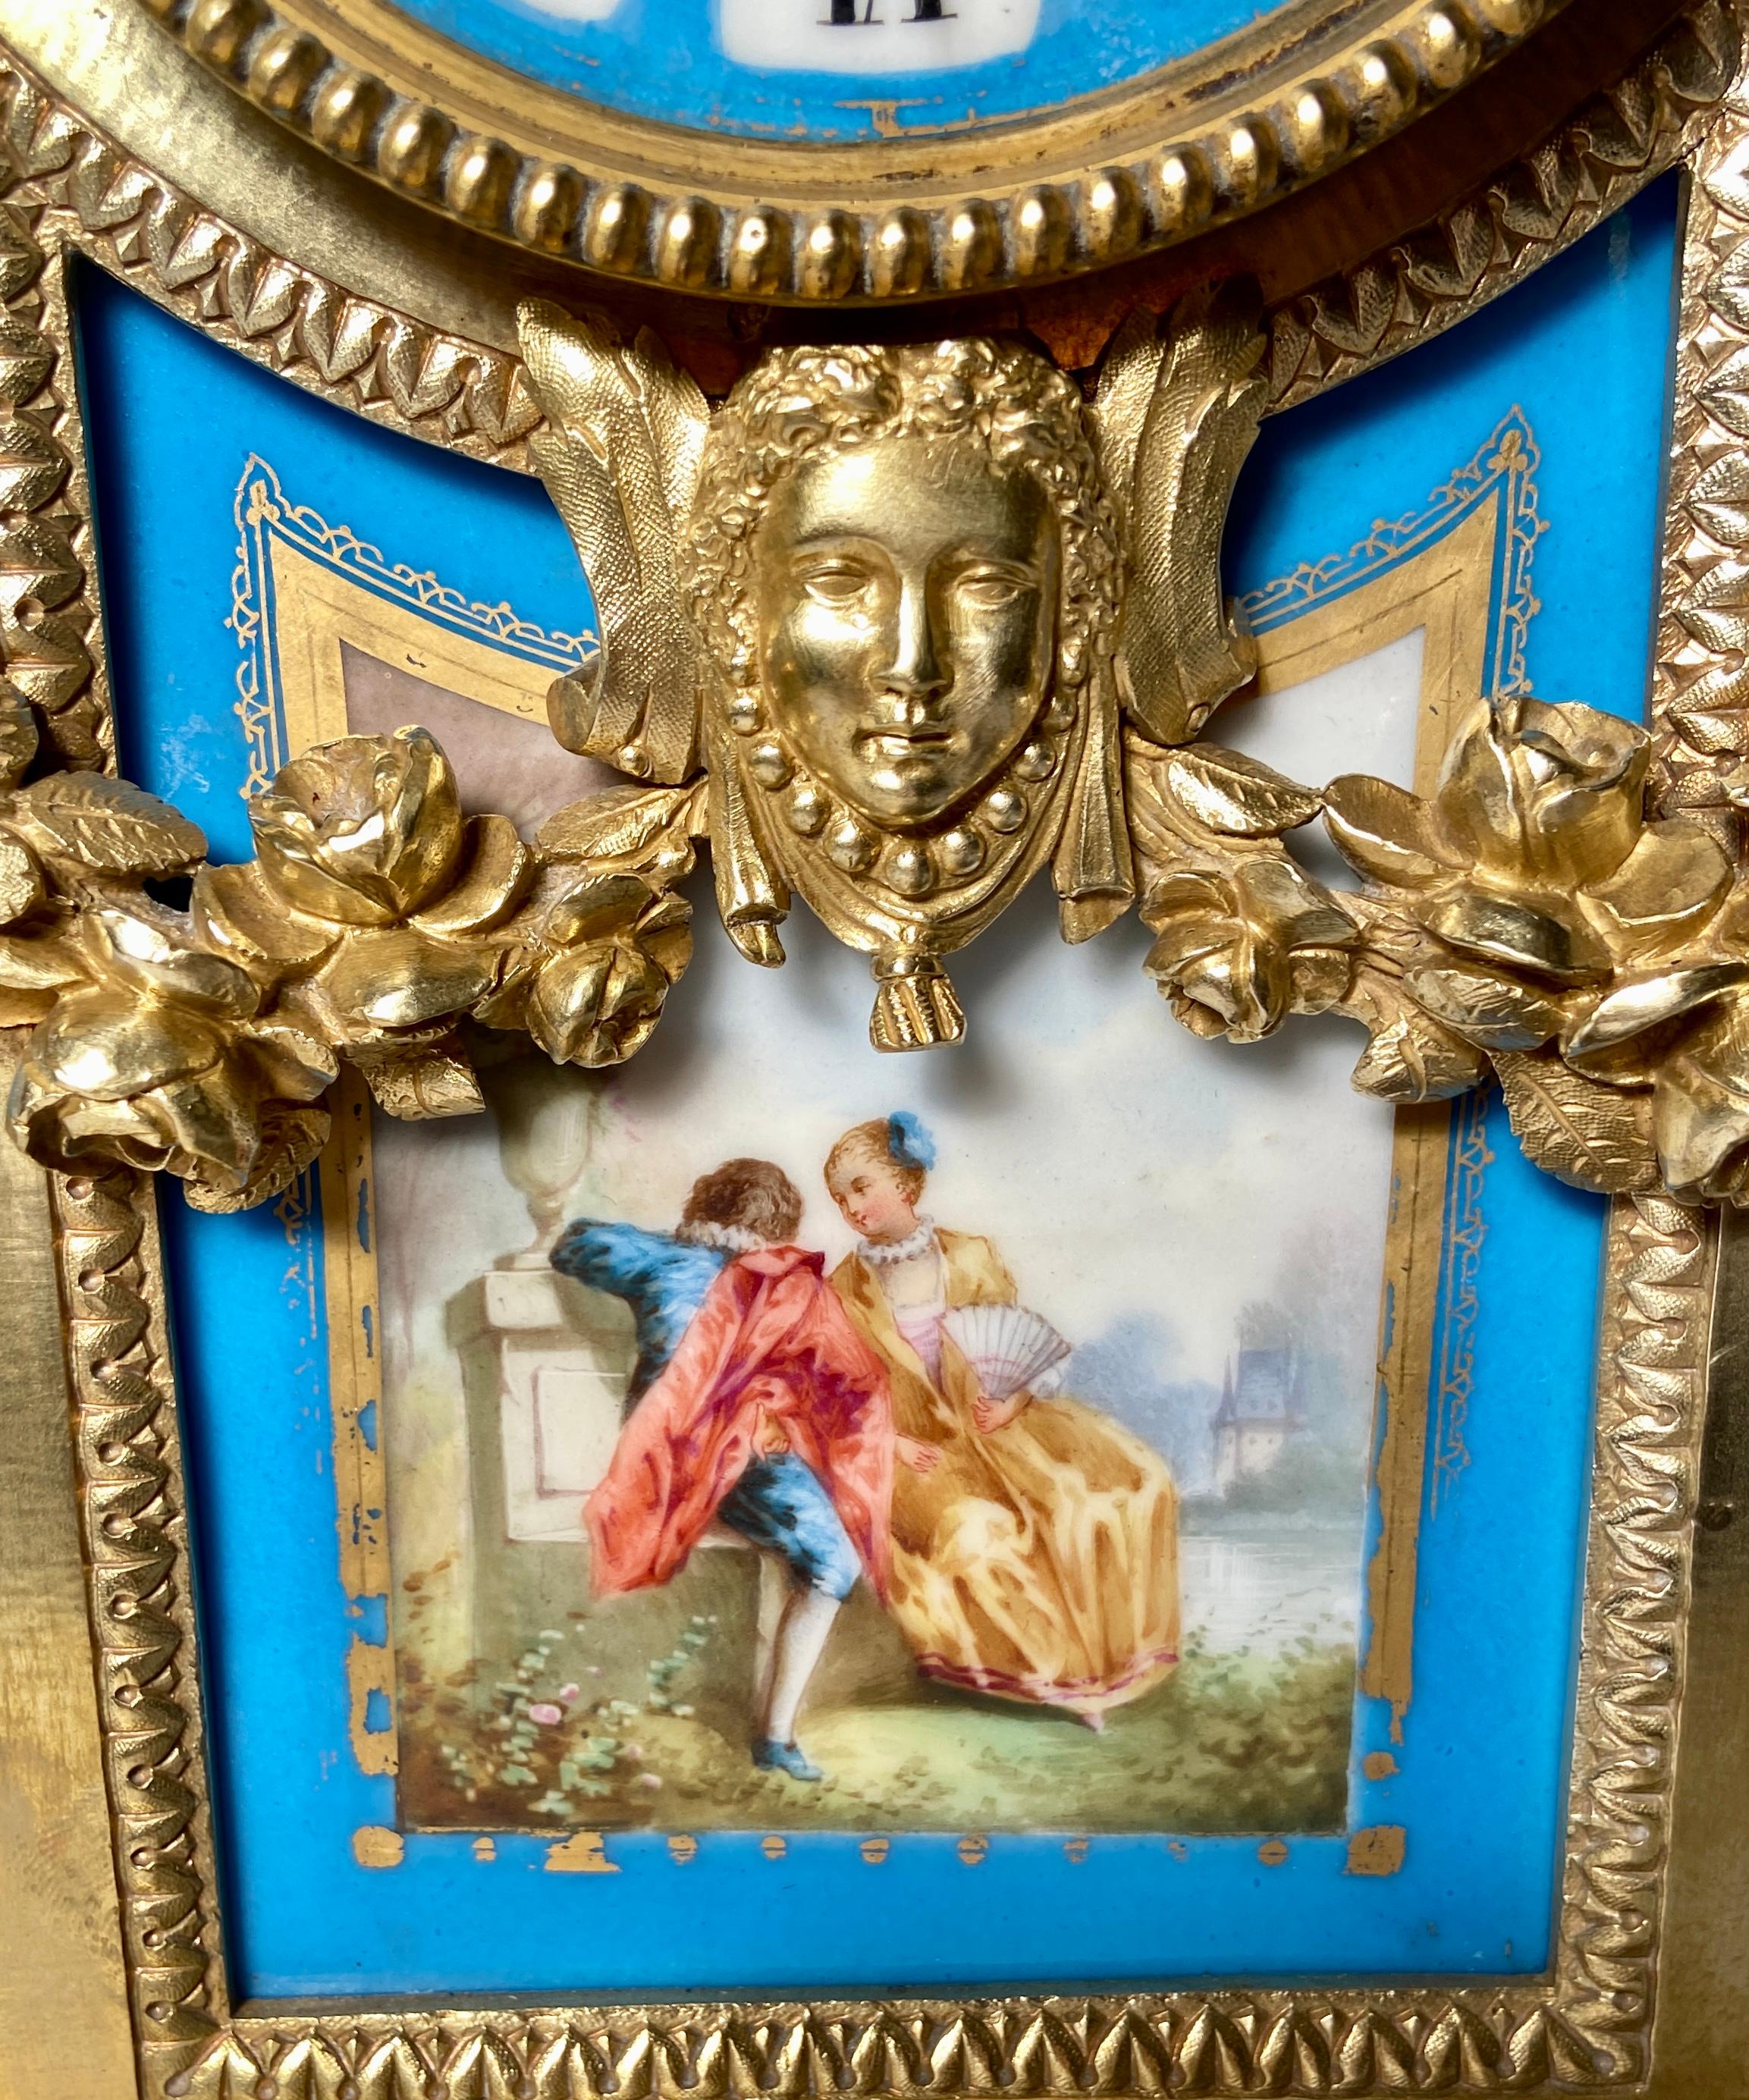 Antique French Louis XVI Blue Sèvres Porcelain and Ormolu Clock, Circa 1875-85 For Sale 4